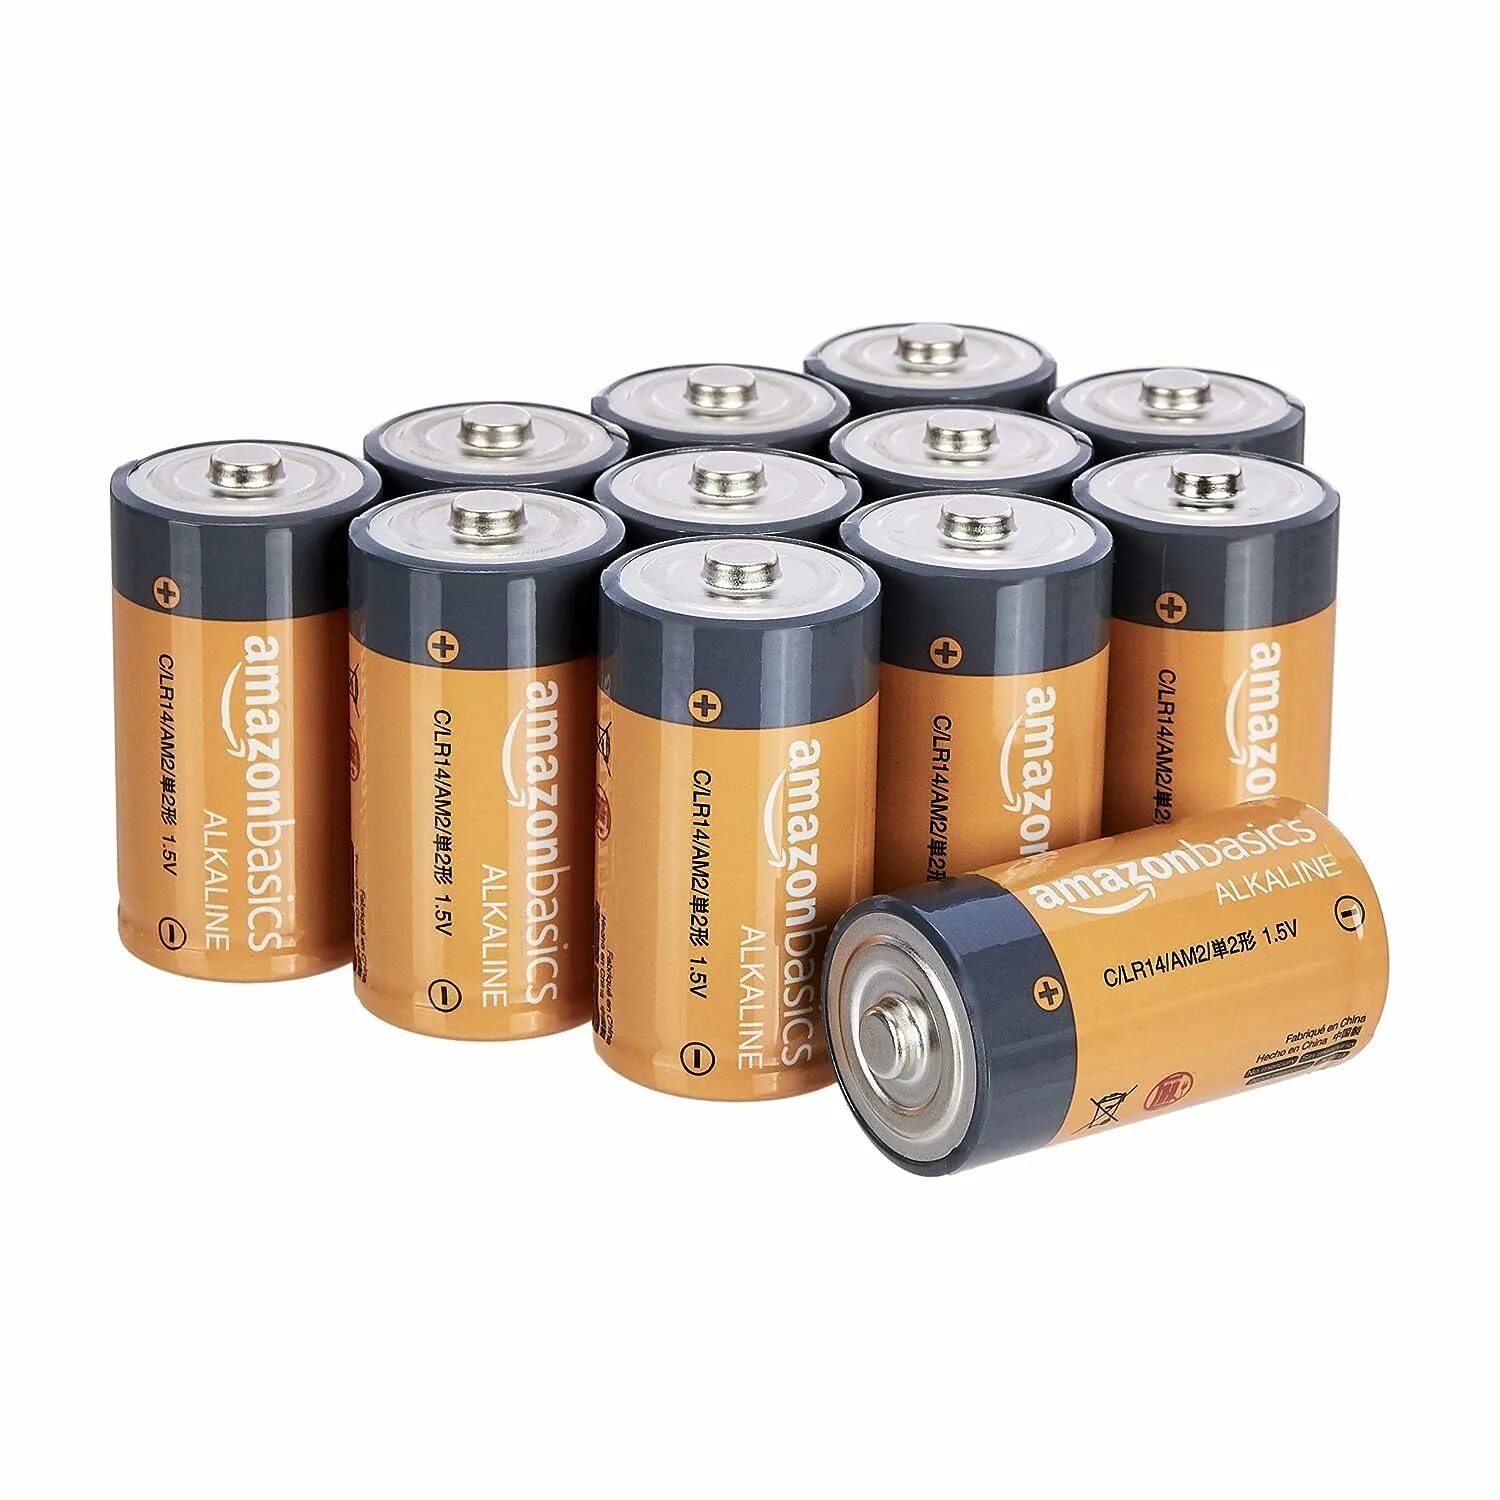 C batteries. Батарейки lr14 Size c 1.5 Volts. Батарейки 4.5 вольт. Батарейка 4.5 вольта. Батарейка на 5 вольта.